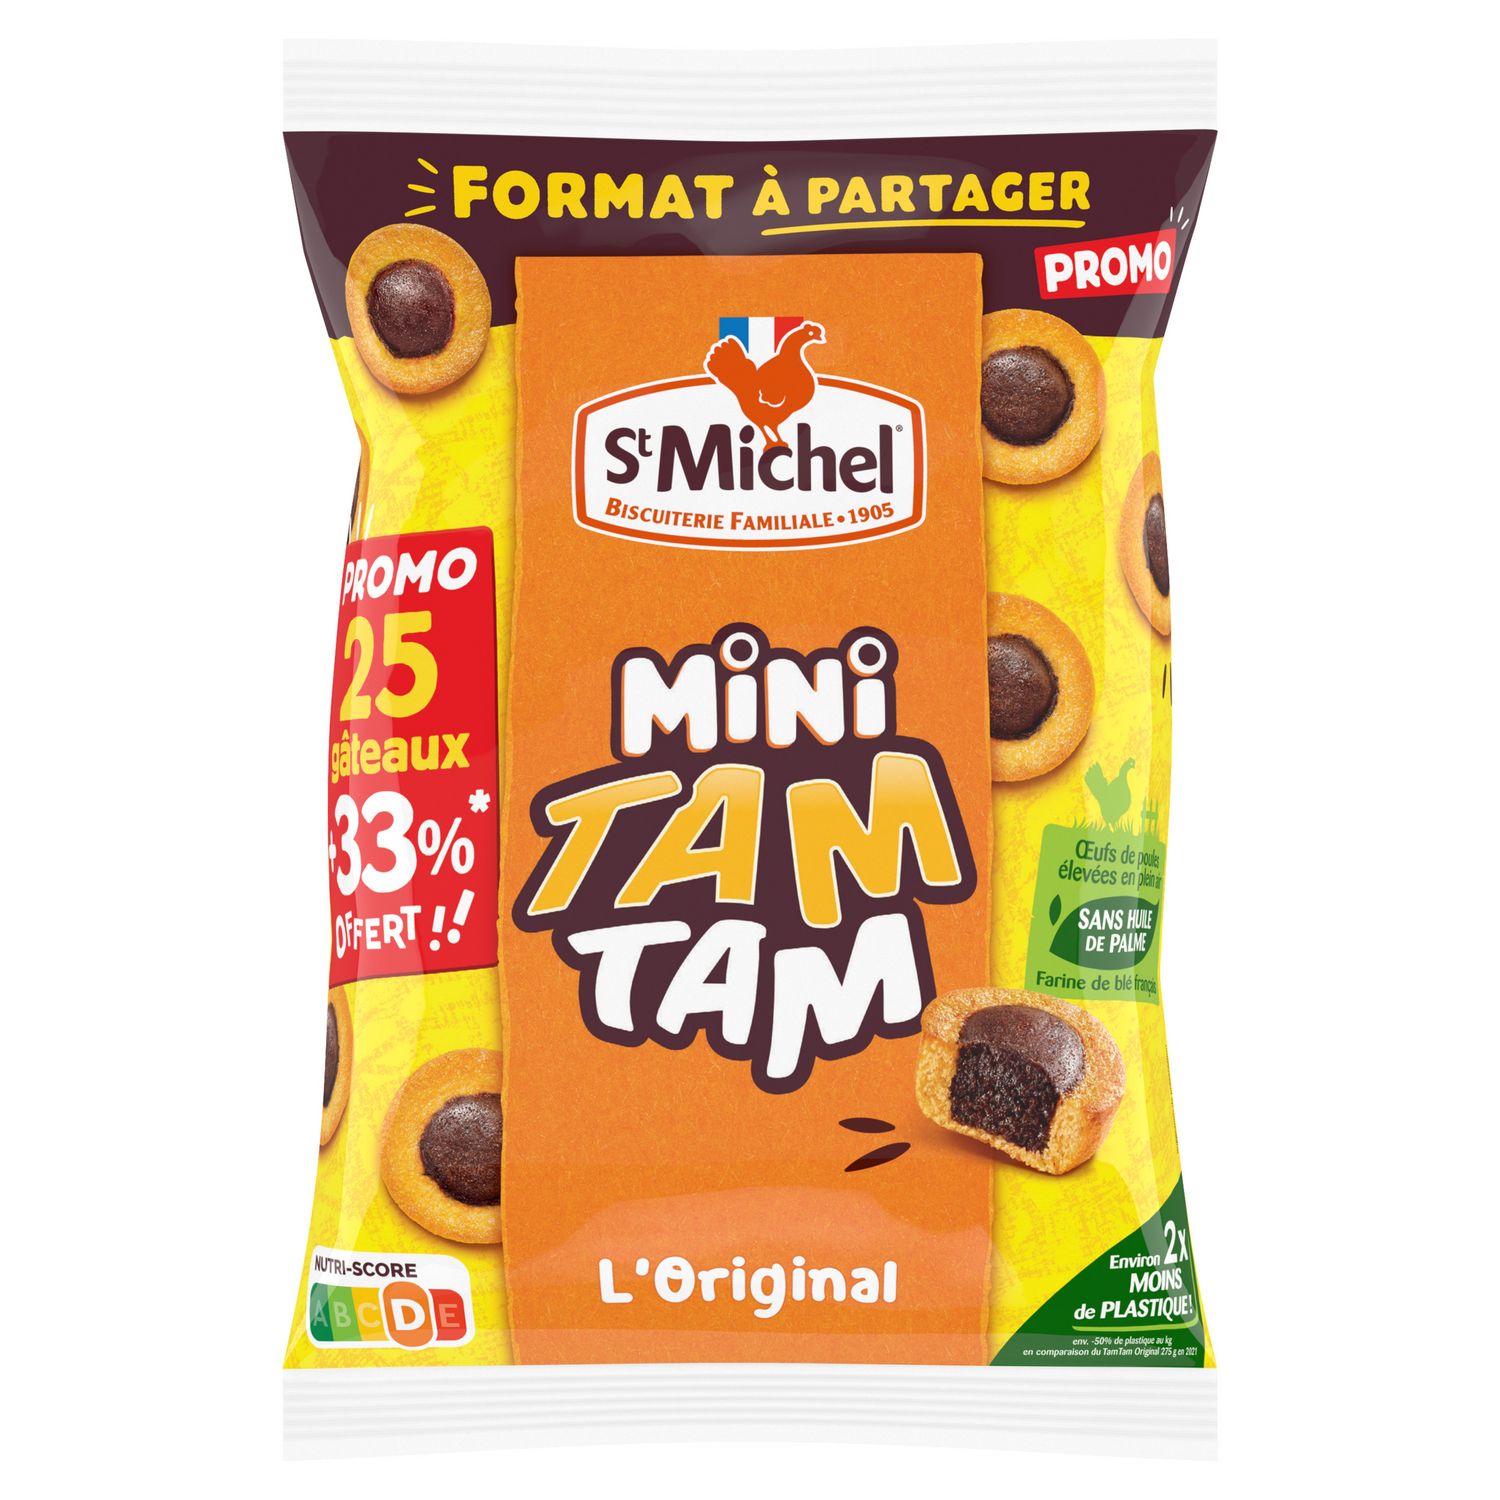 Mini Tam Tam L'Original St Michel